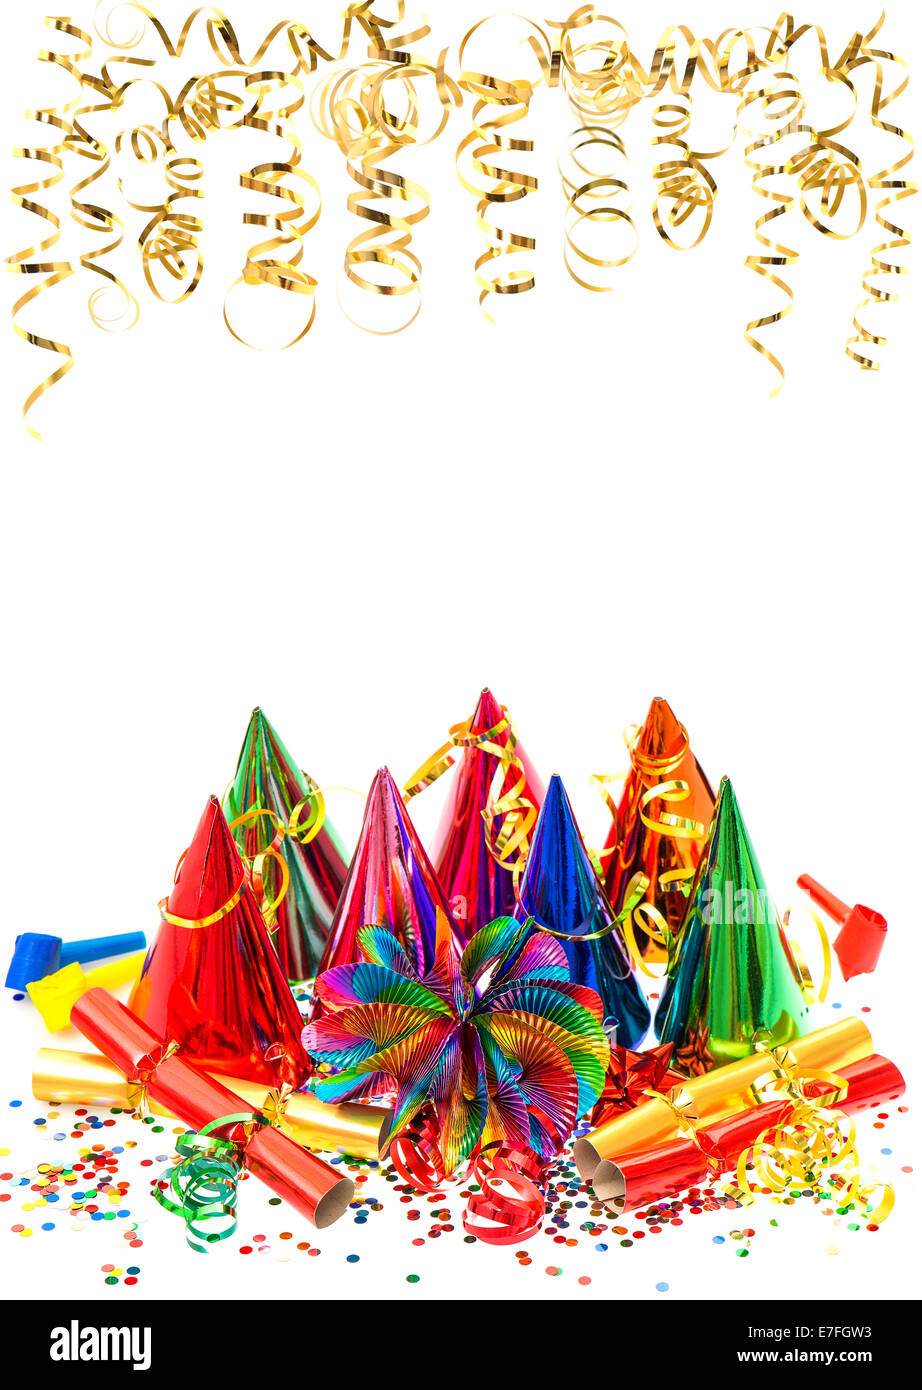 Stelle filanti di carta colorata per carnevale ed eventi